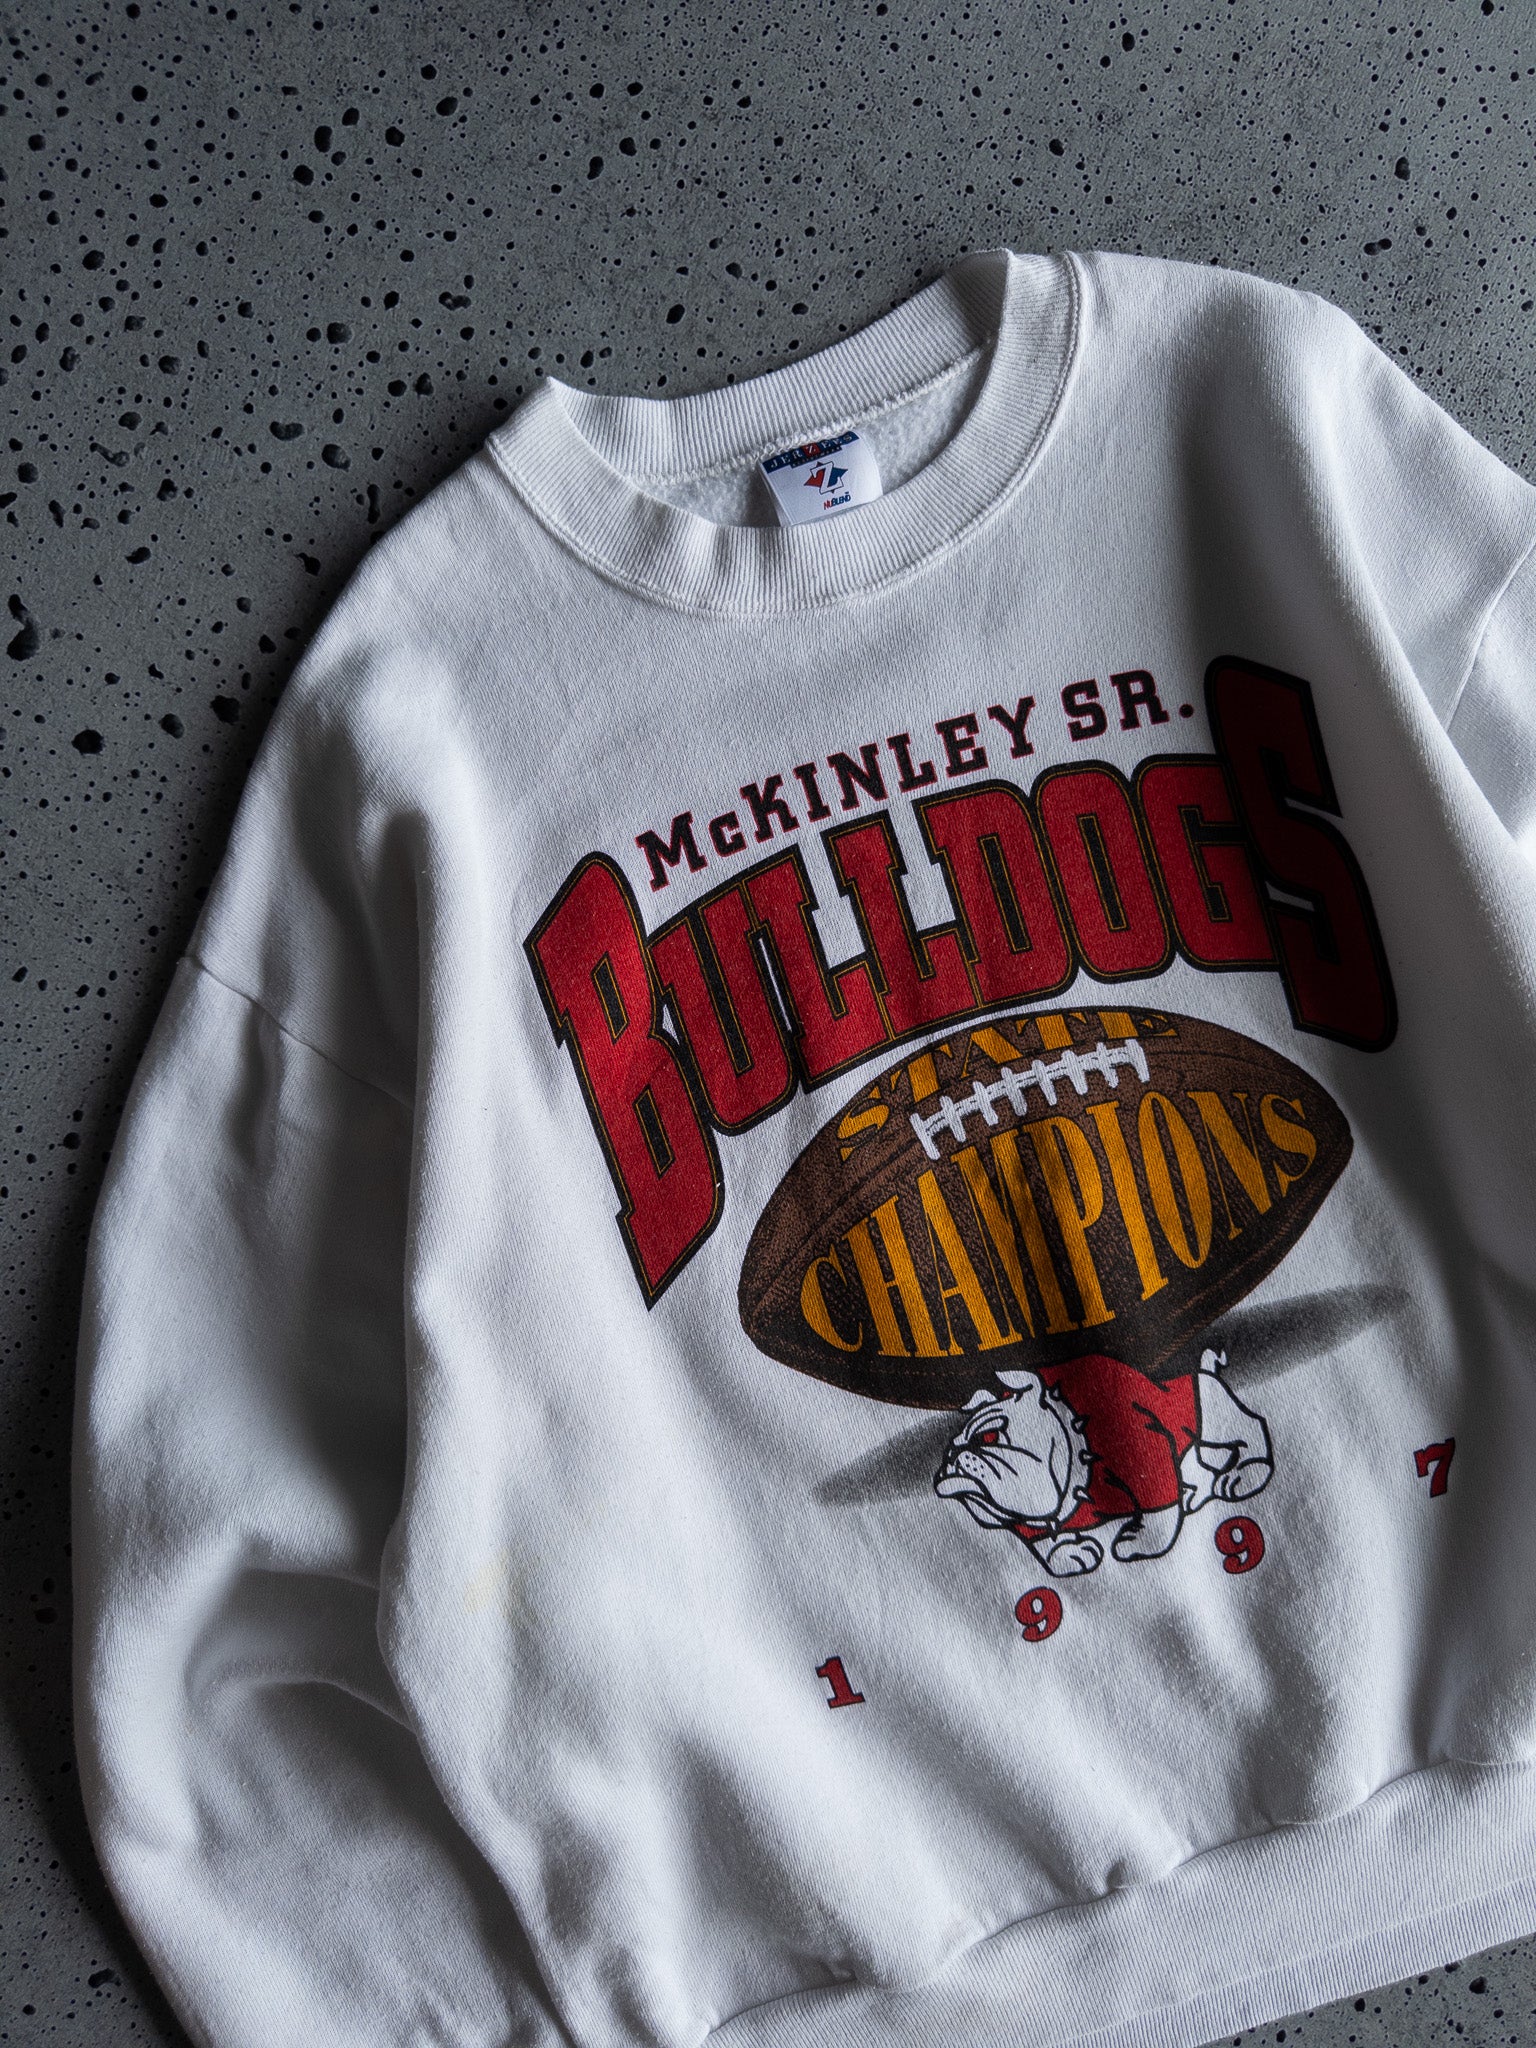 Vintage McKinley Bulldogs 1997 Sweatshirt (L)